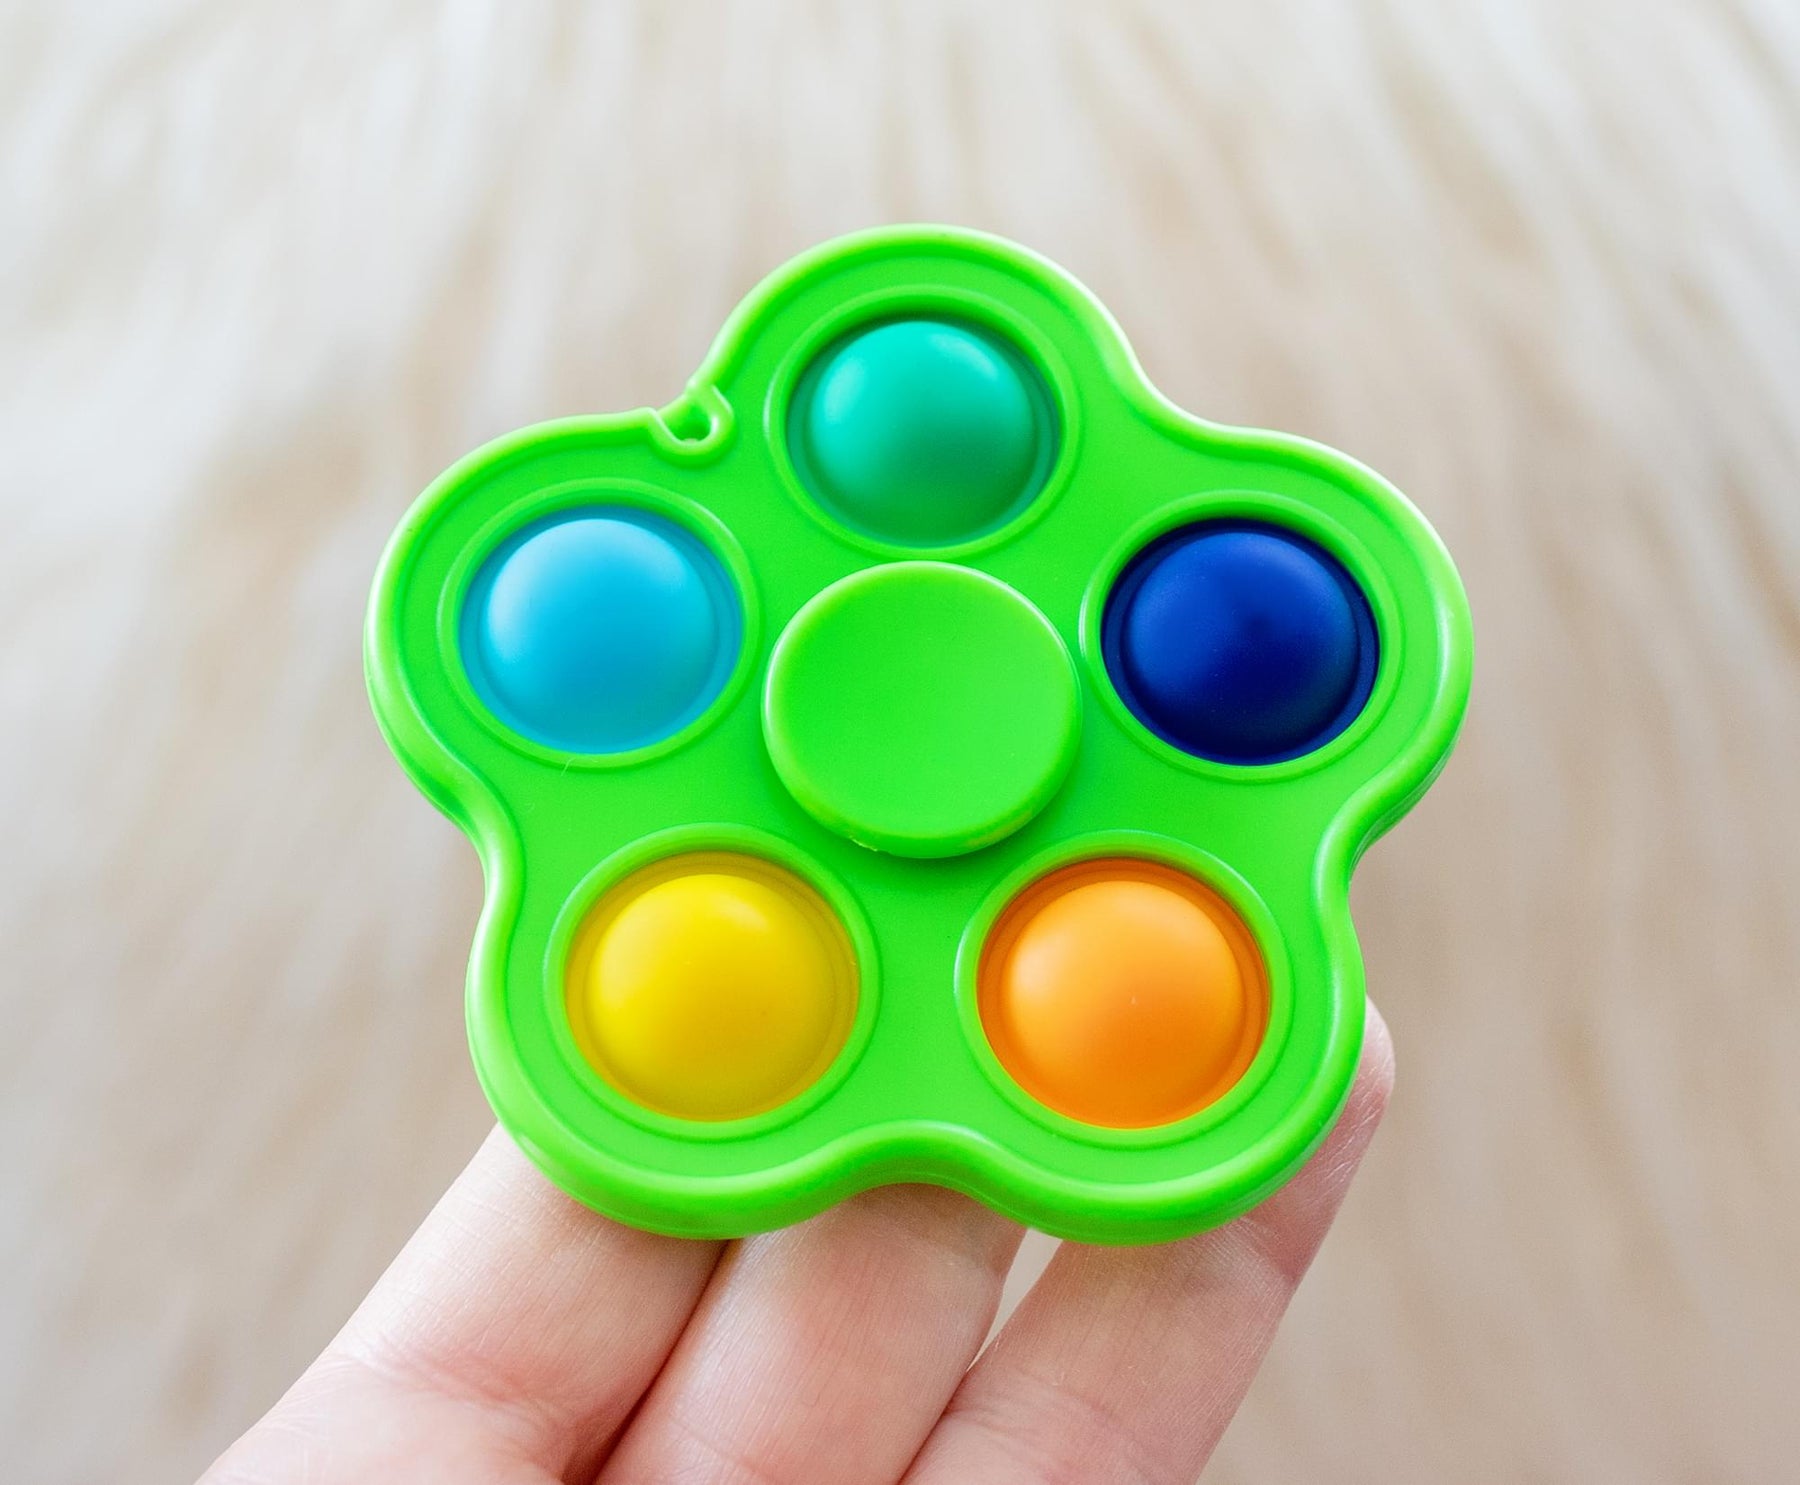 Green Plastic 5 Button Pop Fidget Spinner Toy